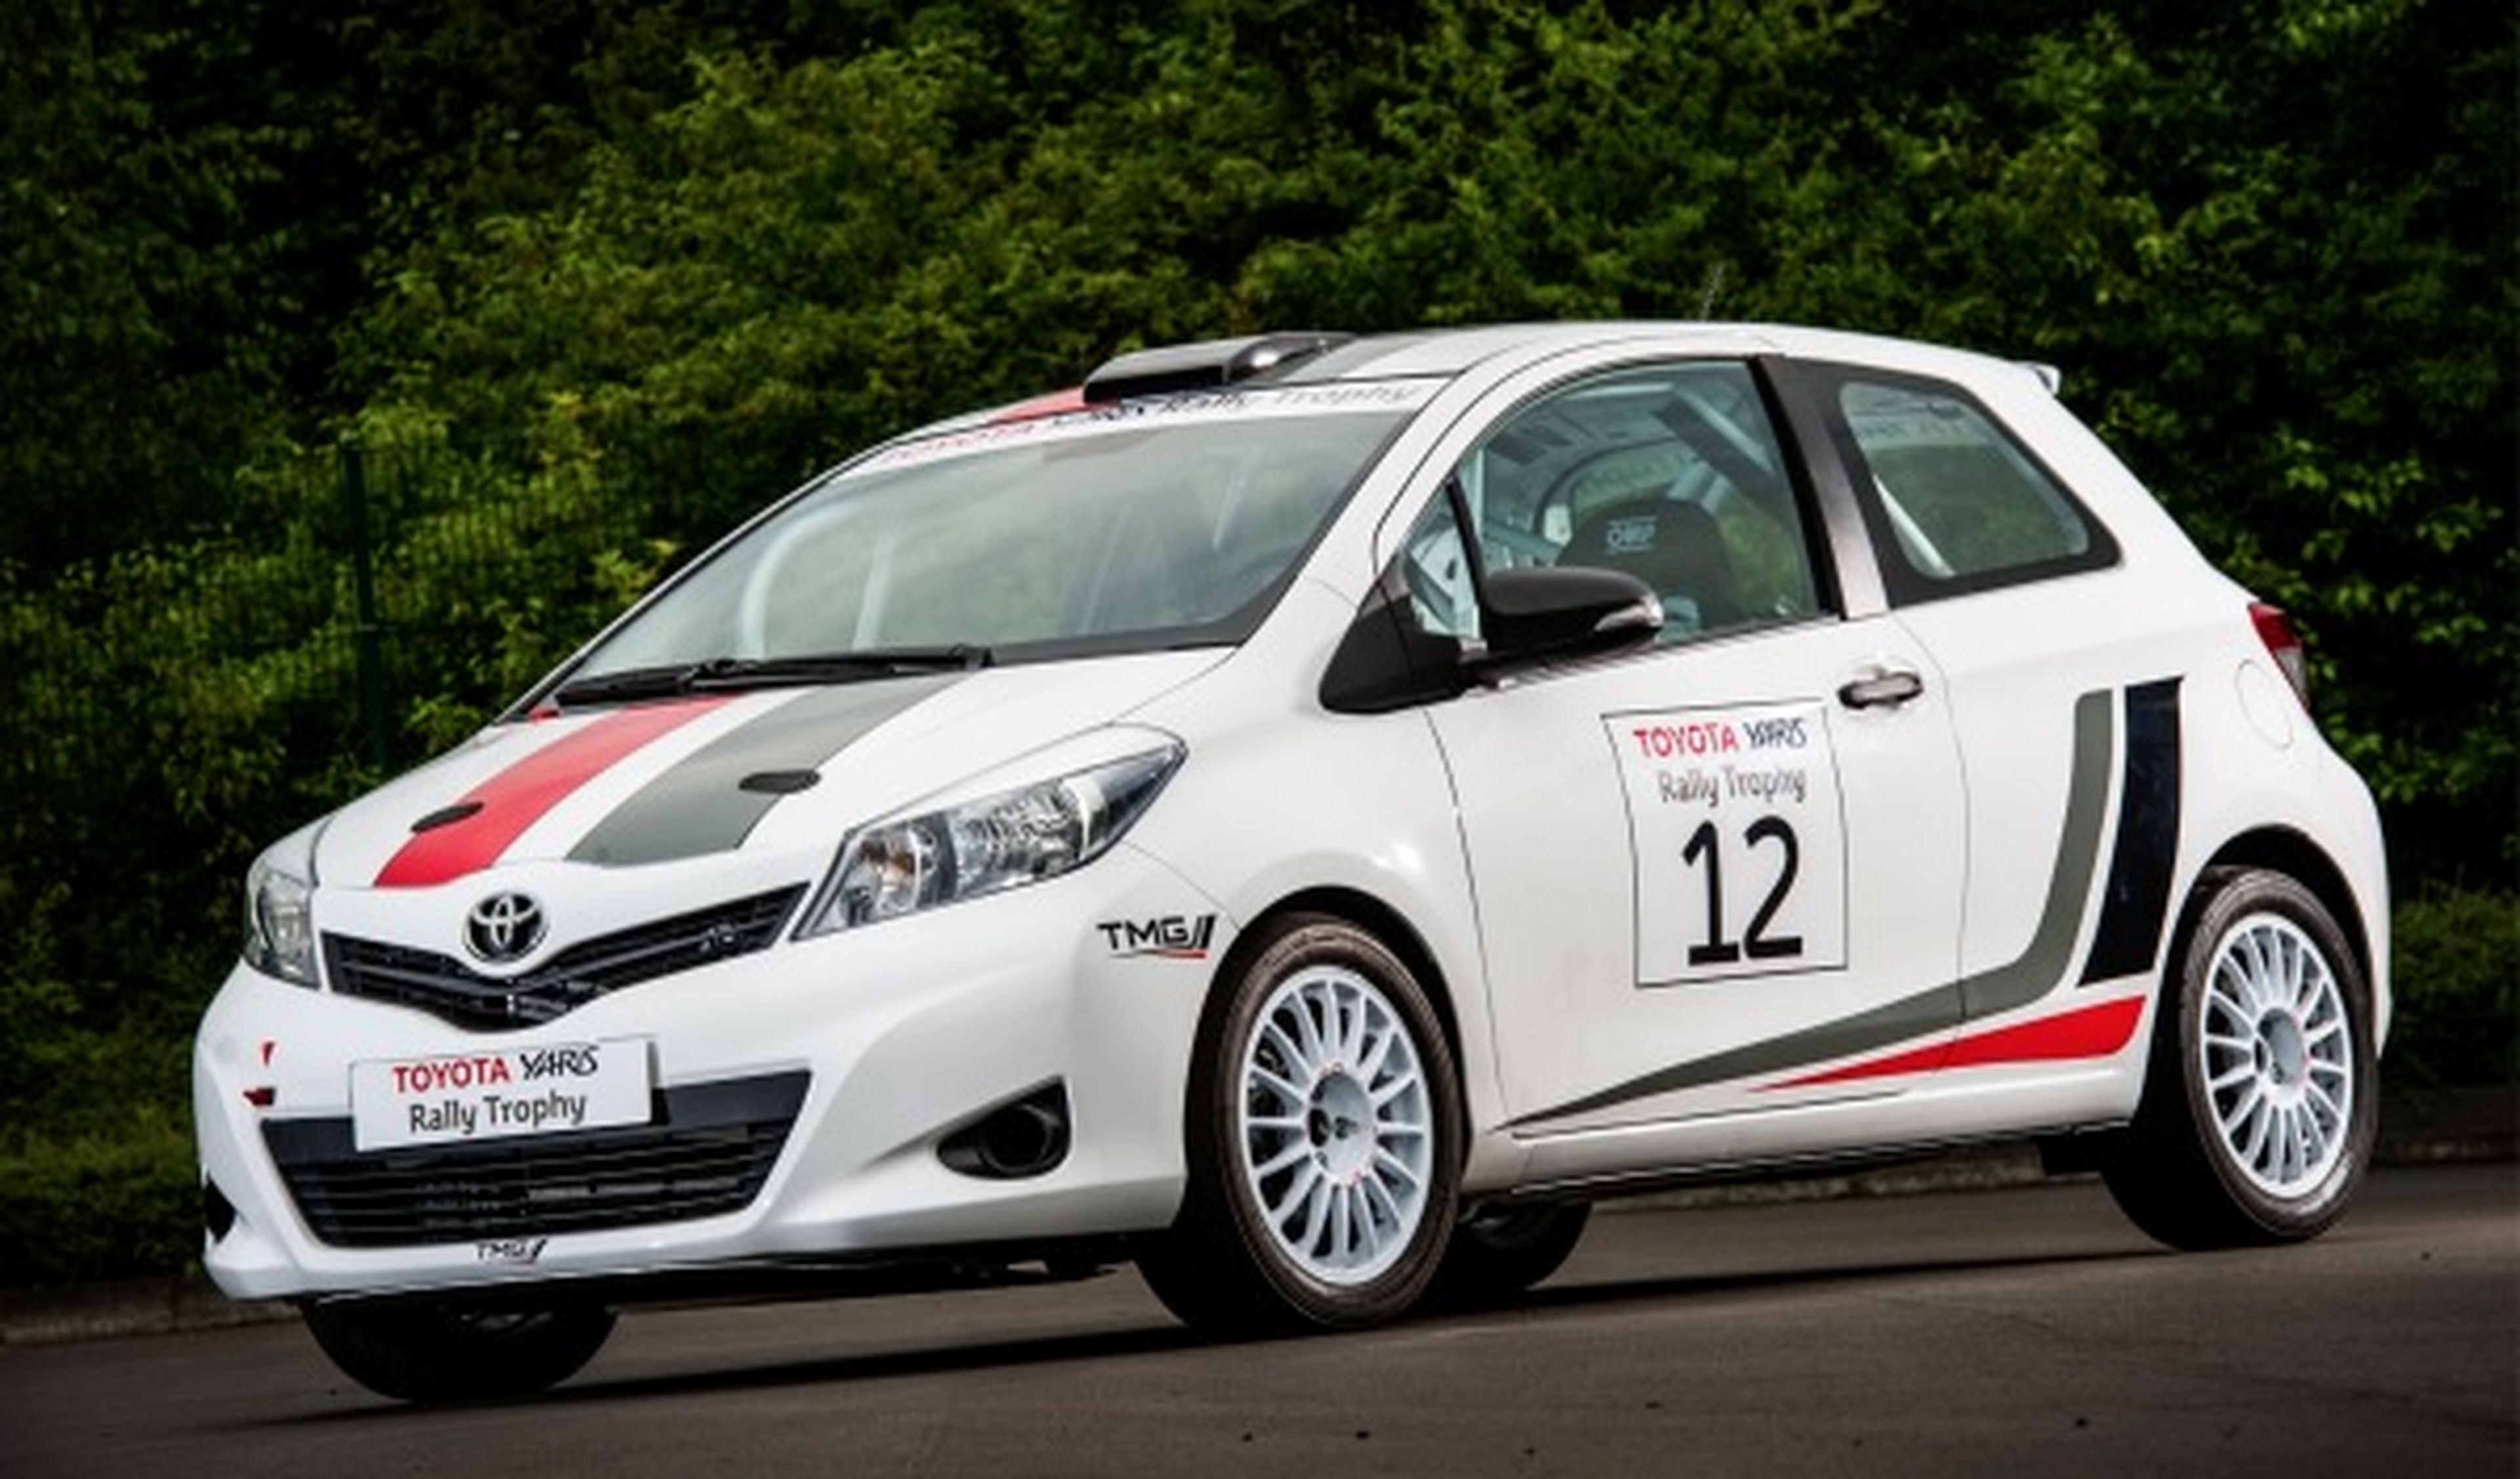 Toyota confirma que vuelve al WRC en 2013